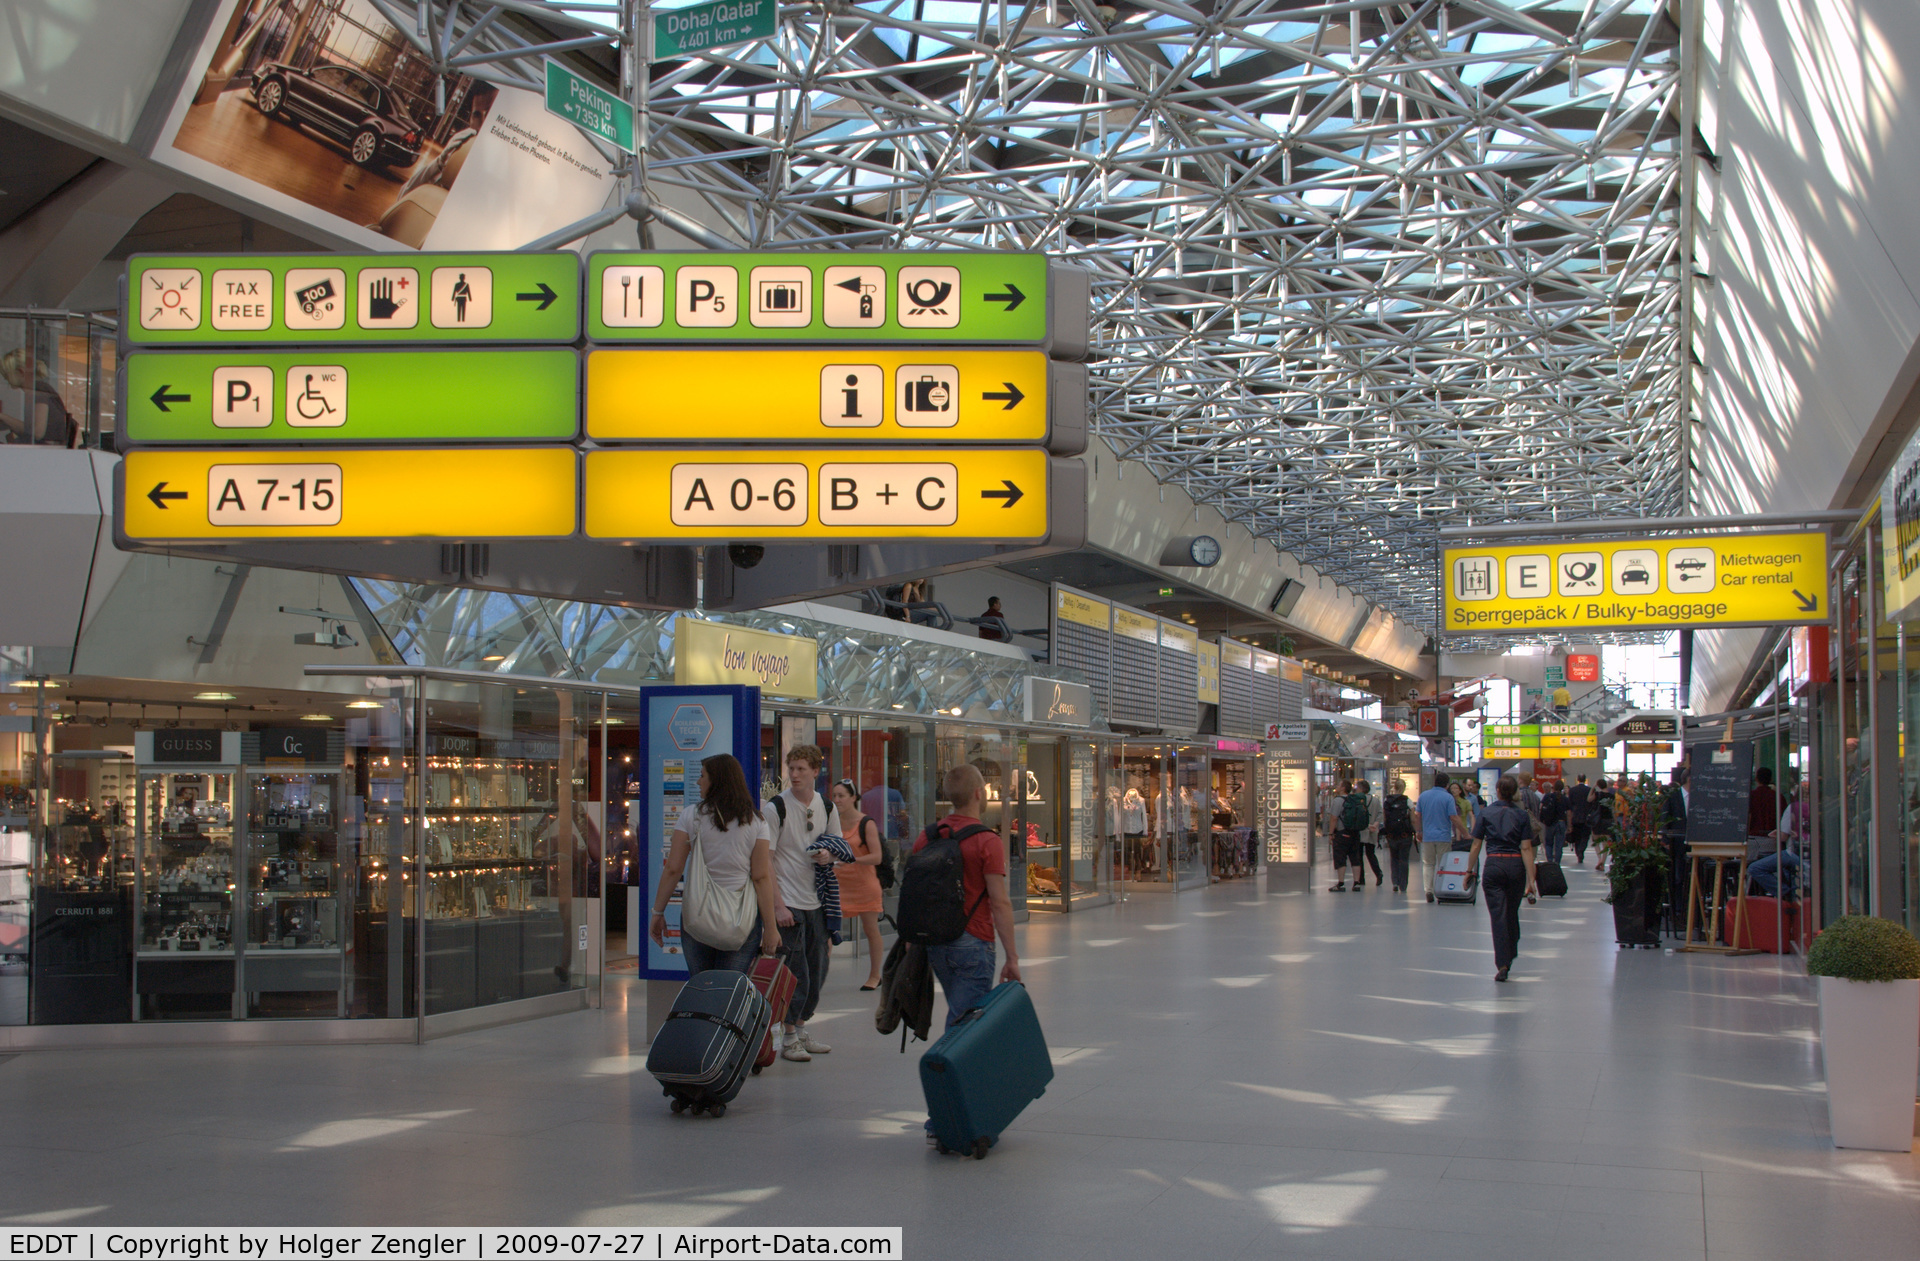 Tegel International Airport (closing in 2011), Berlin Germany (EDDT) - View inside of Terminal A